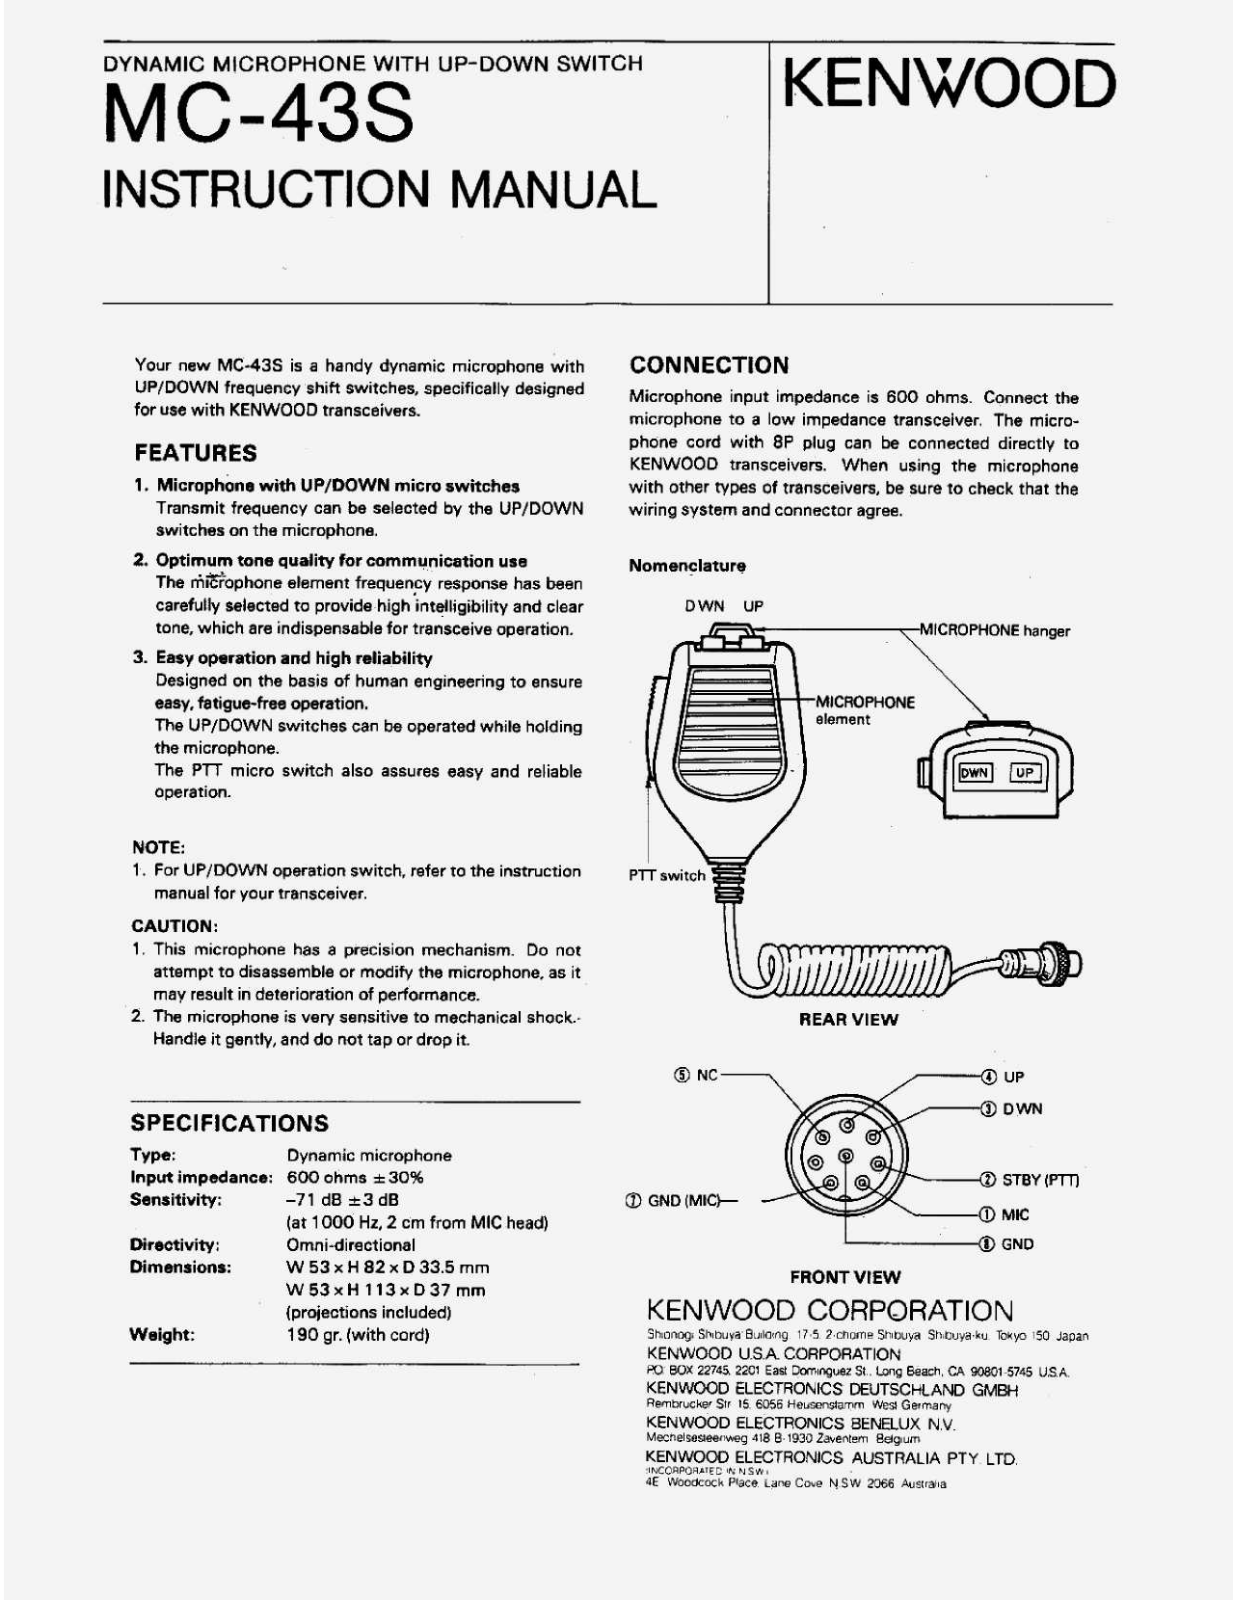 Kenwood MC-43S User Manual